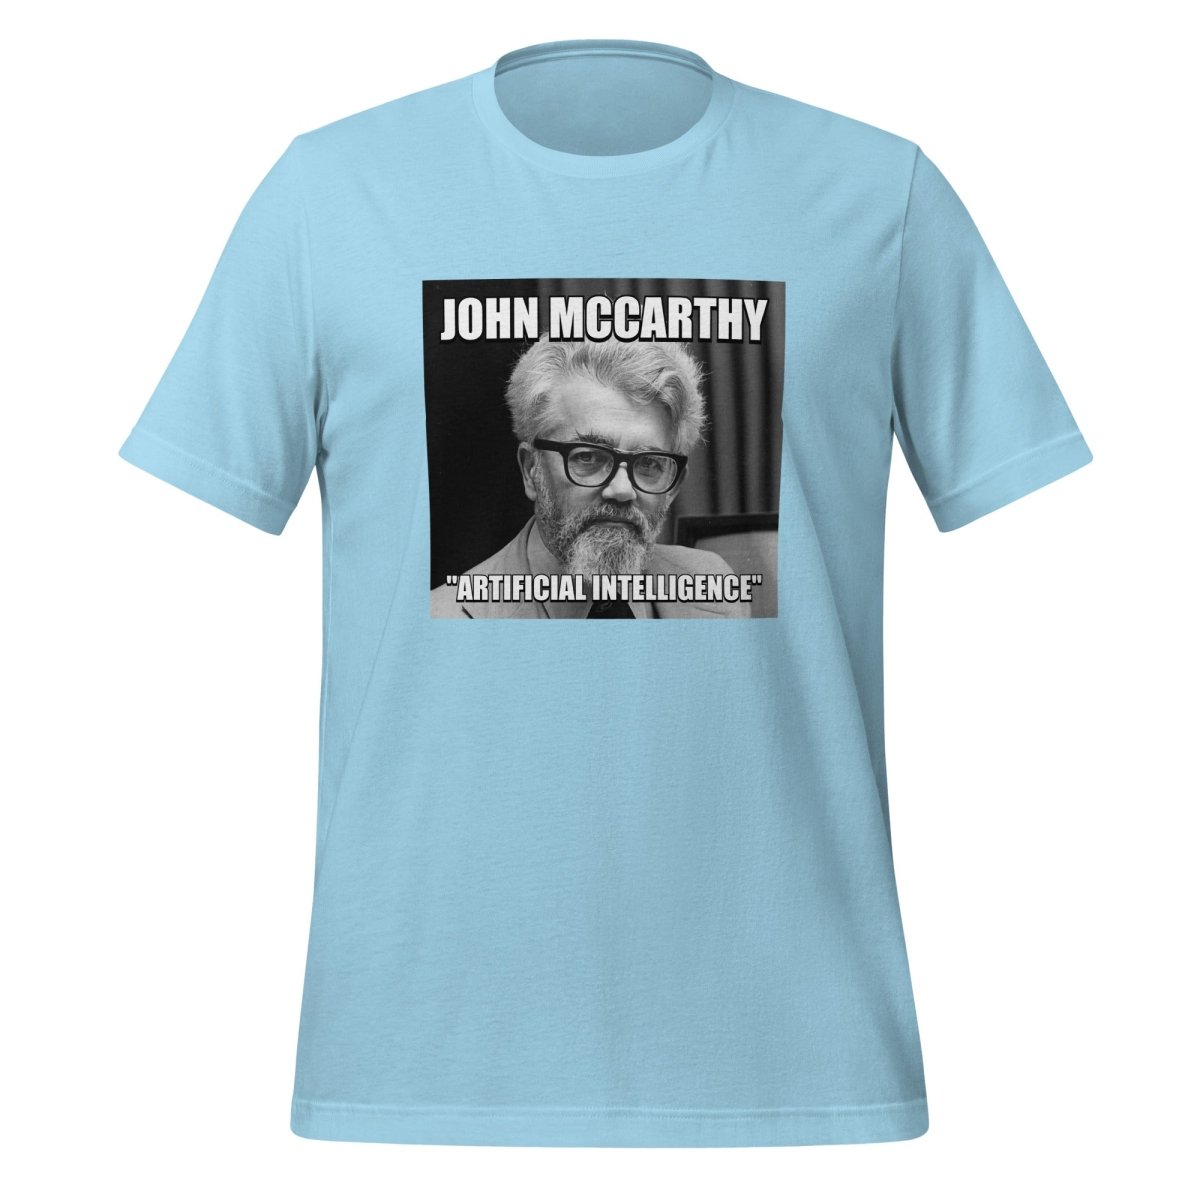 John McCarthy "Artificial Intelligence" T - Shirt (unisex) - Ocean Blue - AI Store